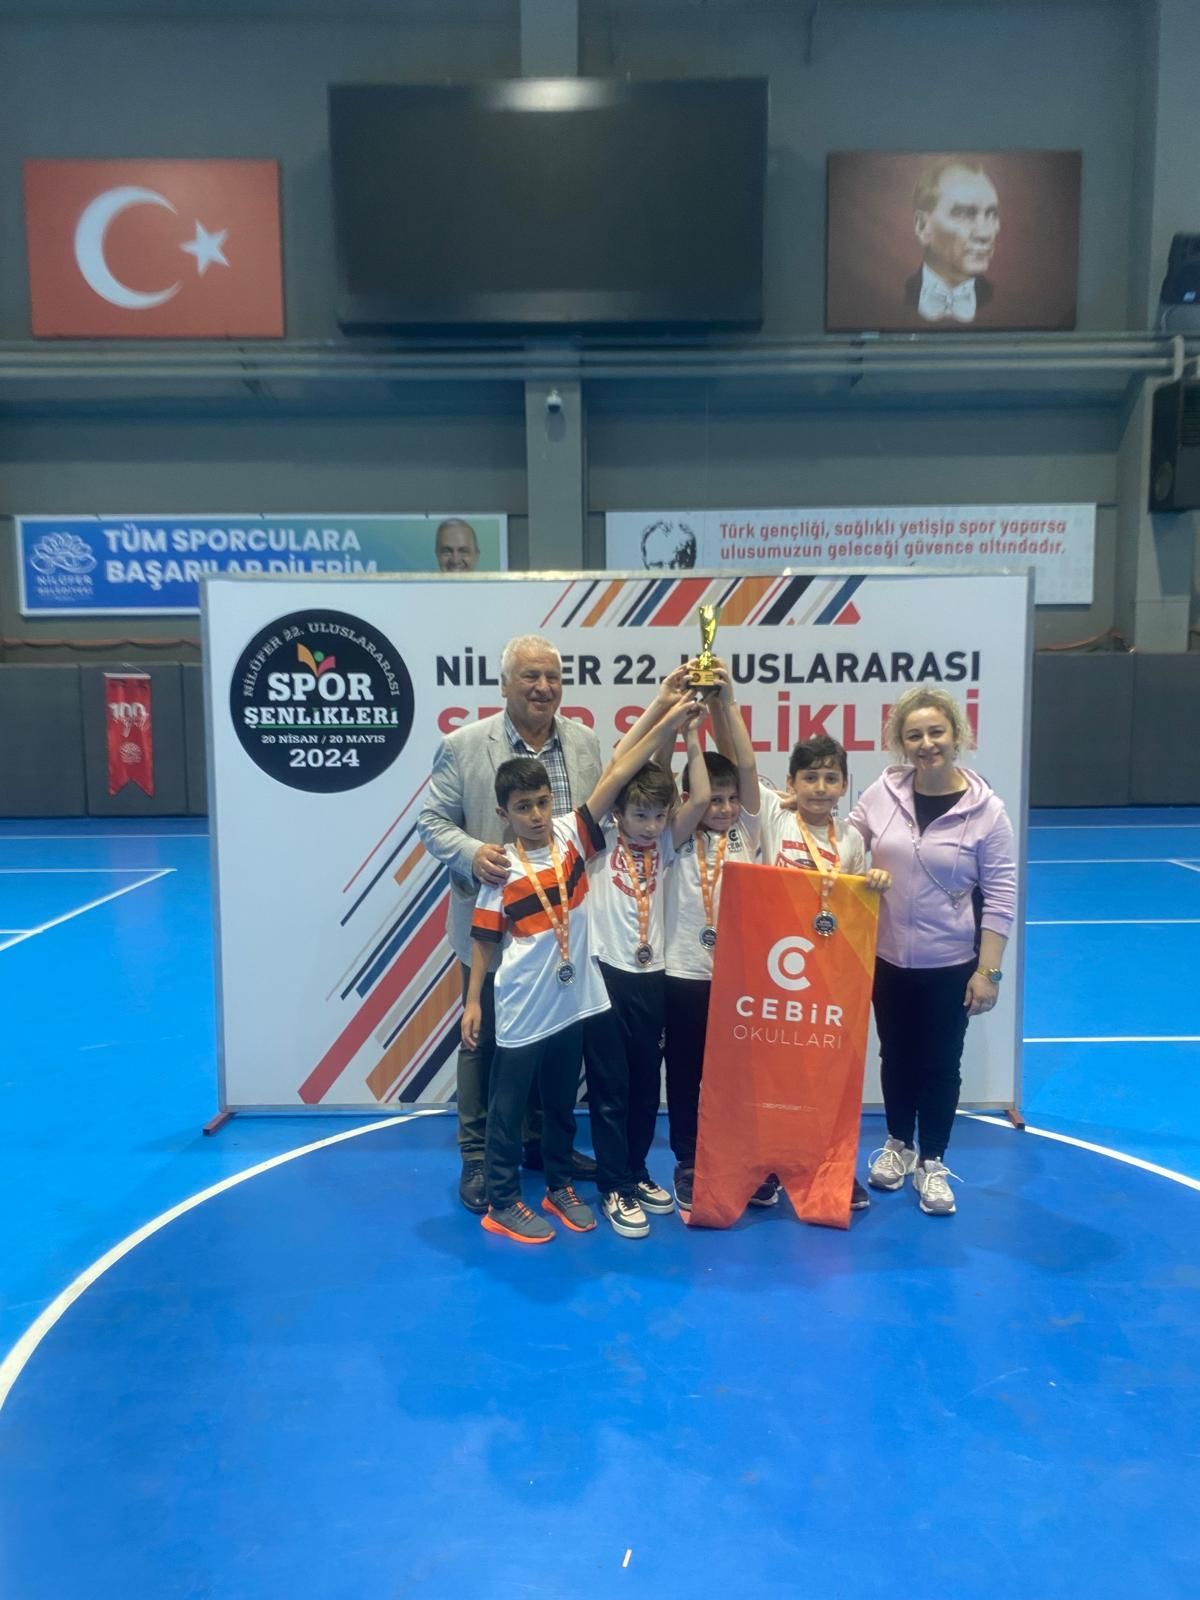 22. Nilfer Spor enlikleri Badminton Turnuvas Erkekler Takmmz 1. Oldu!!